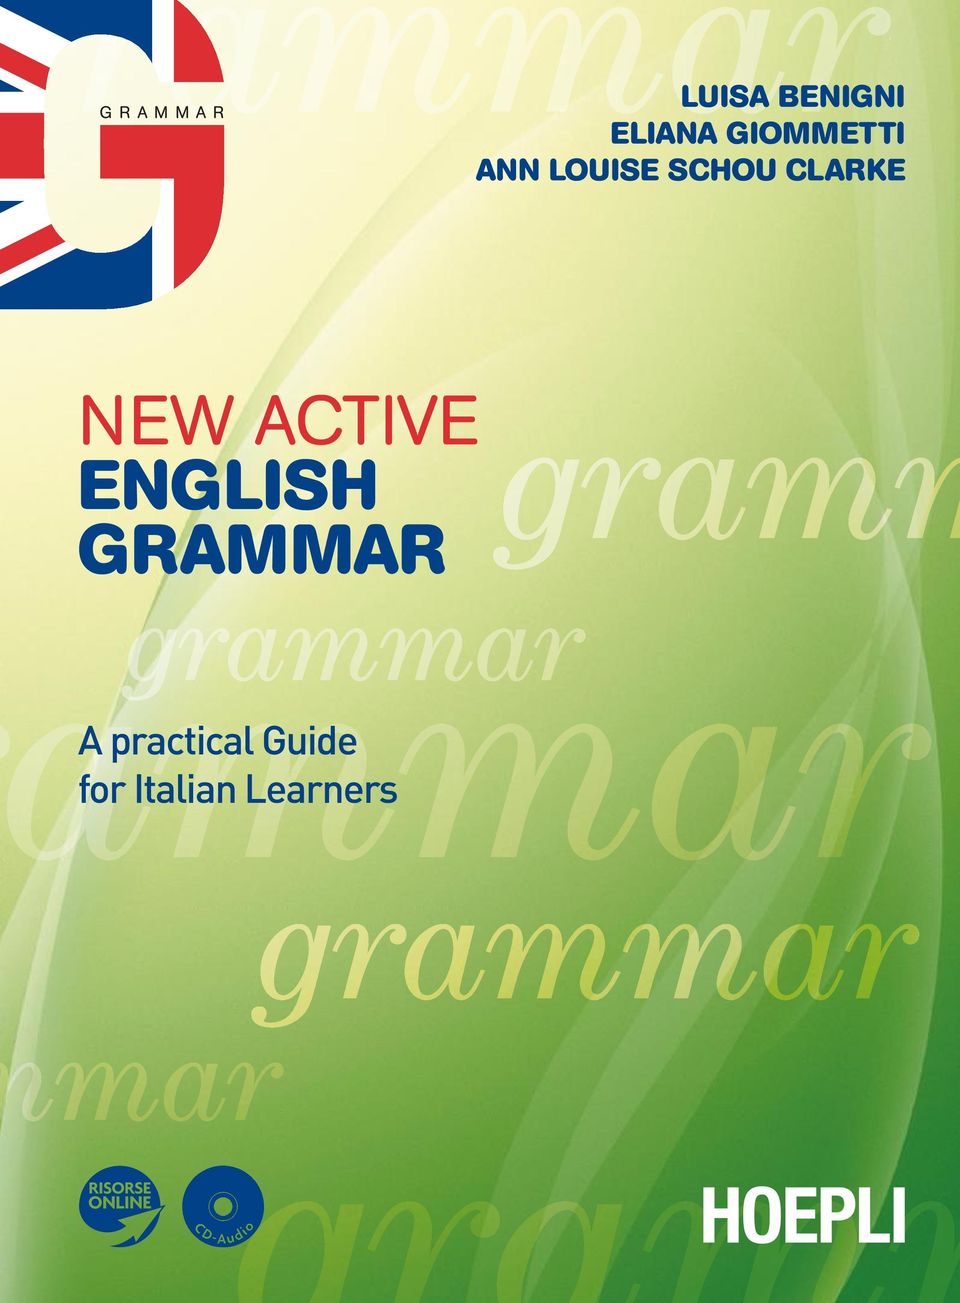 NEW ACTIVE ENGLISH GRAMMAR A